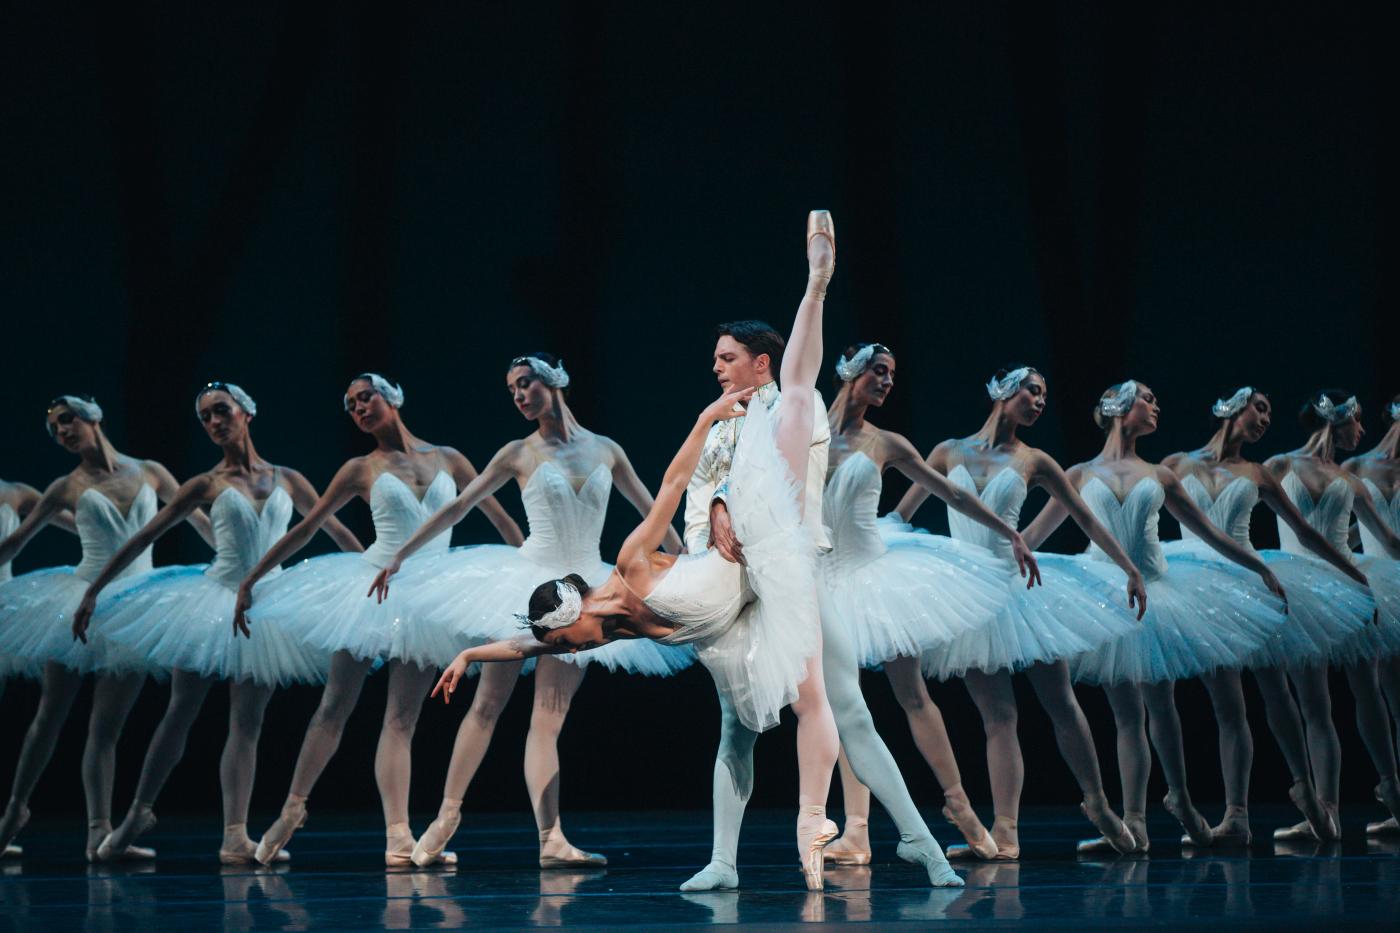 1. B.Bemet (Odette), J.Caley (Prince Siegfried), and ensemble, “Swan Lake” by A.Woolliams after M.Petipa, The Australian Ballet 2023 © K.Longley 